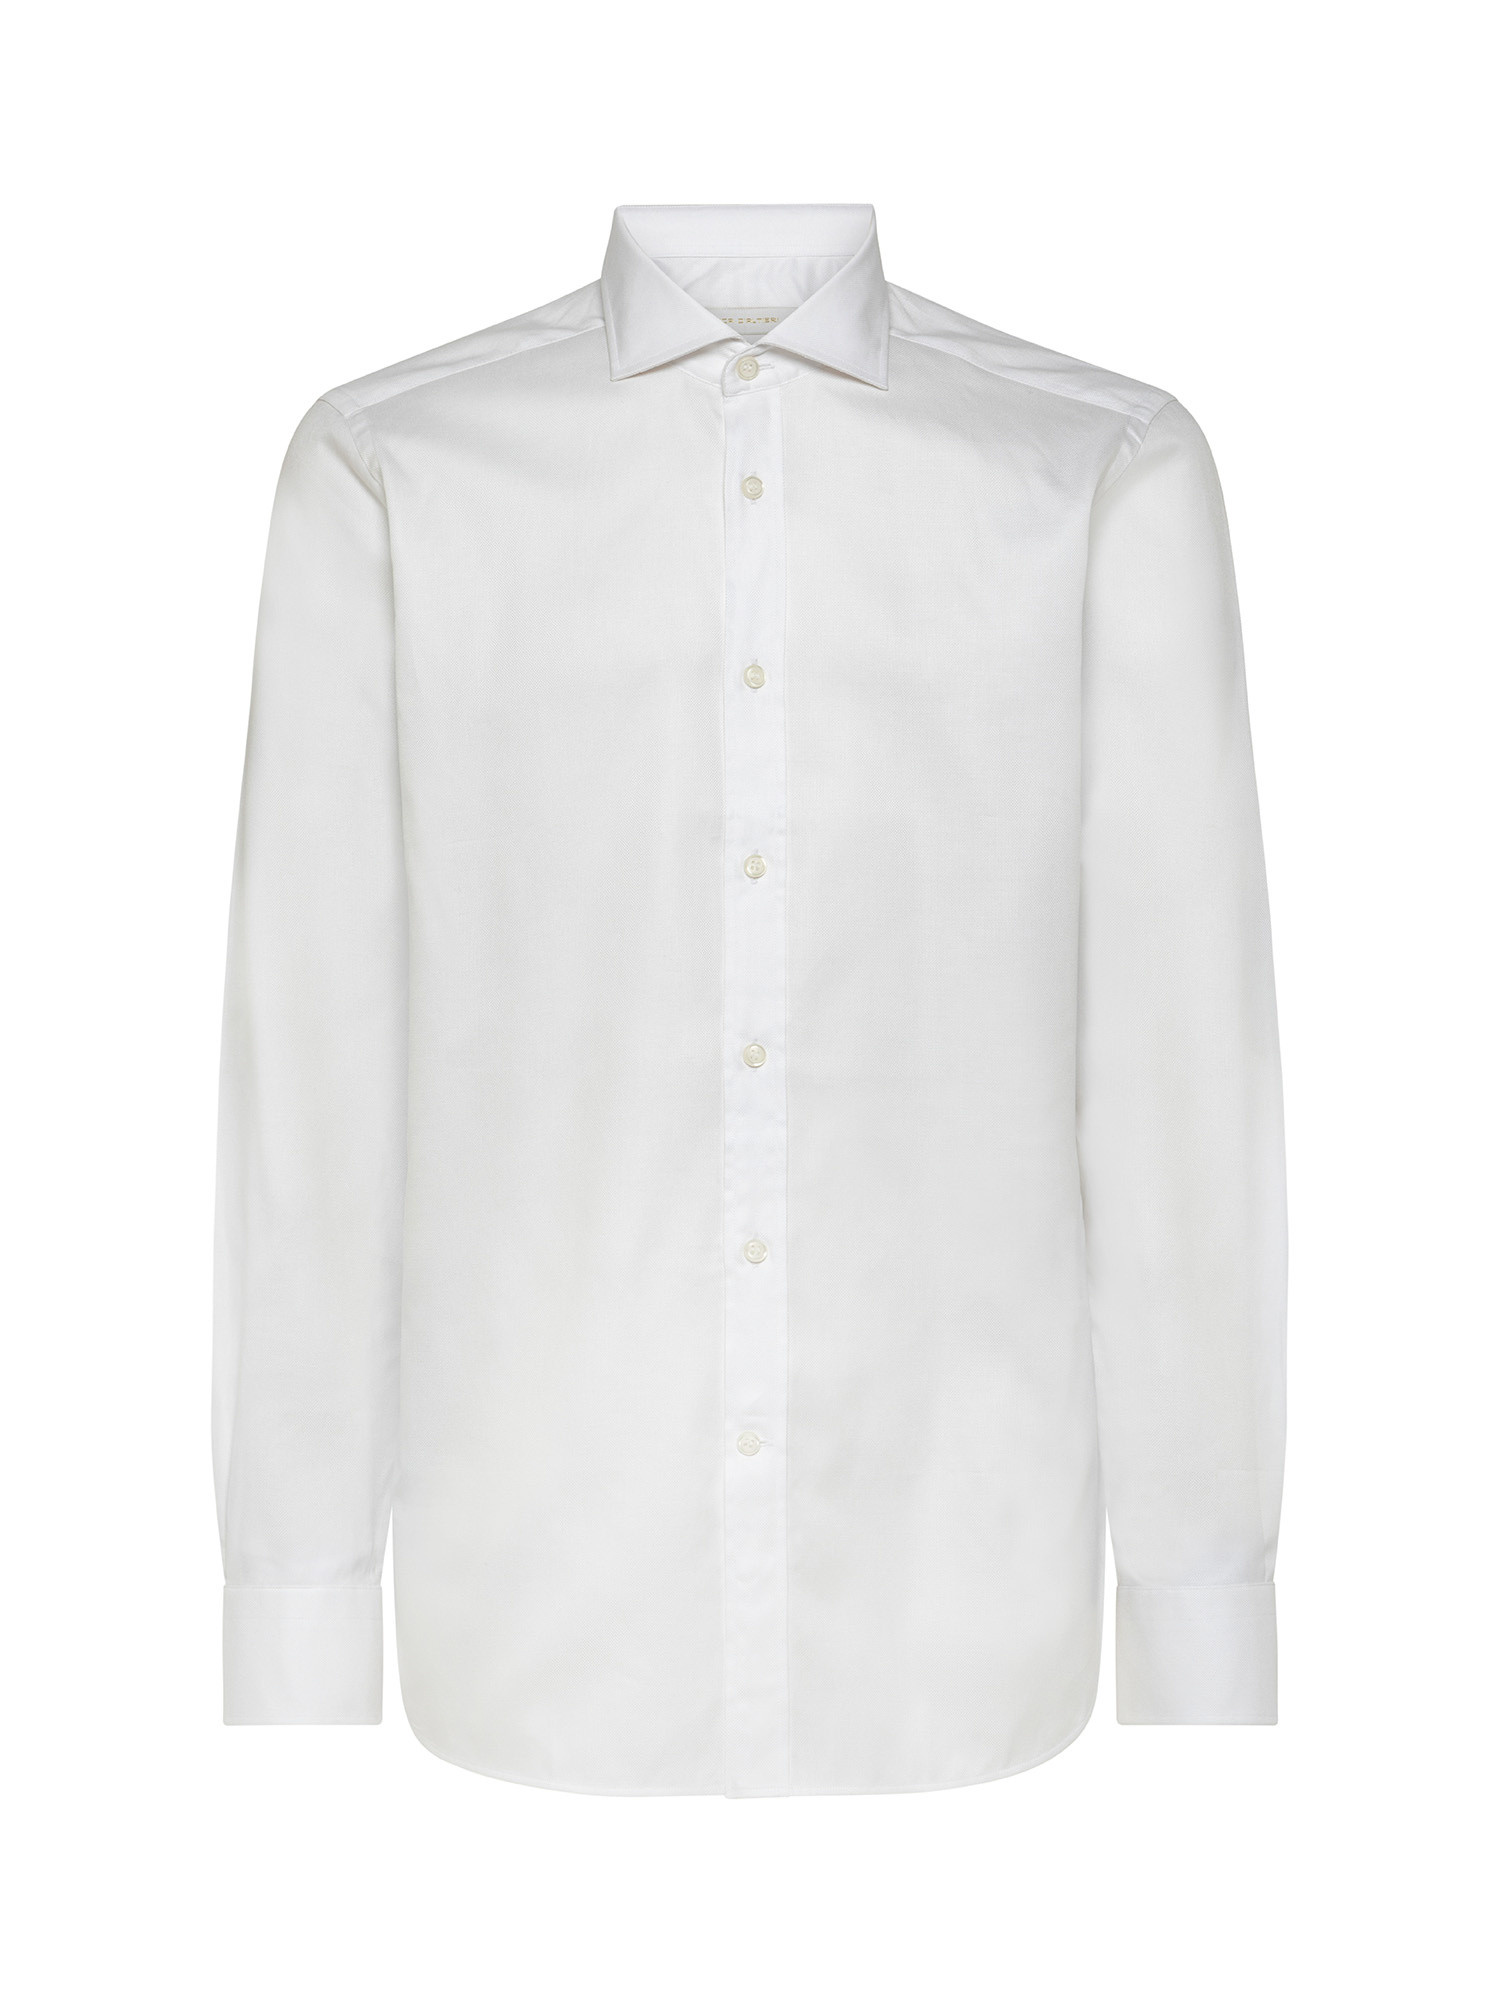 Camicia slim fit in puro cotone, Bianco 1, large image number 1